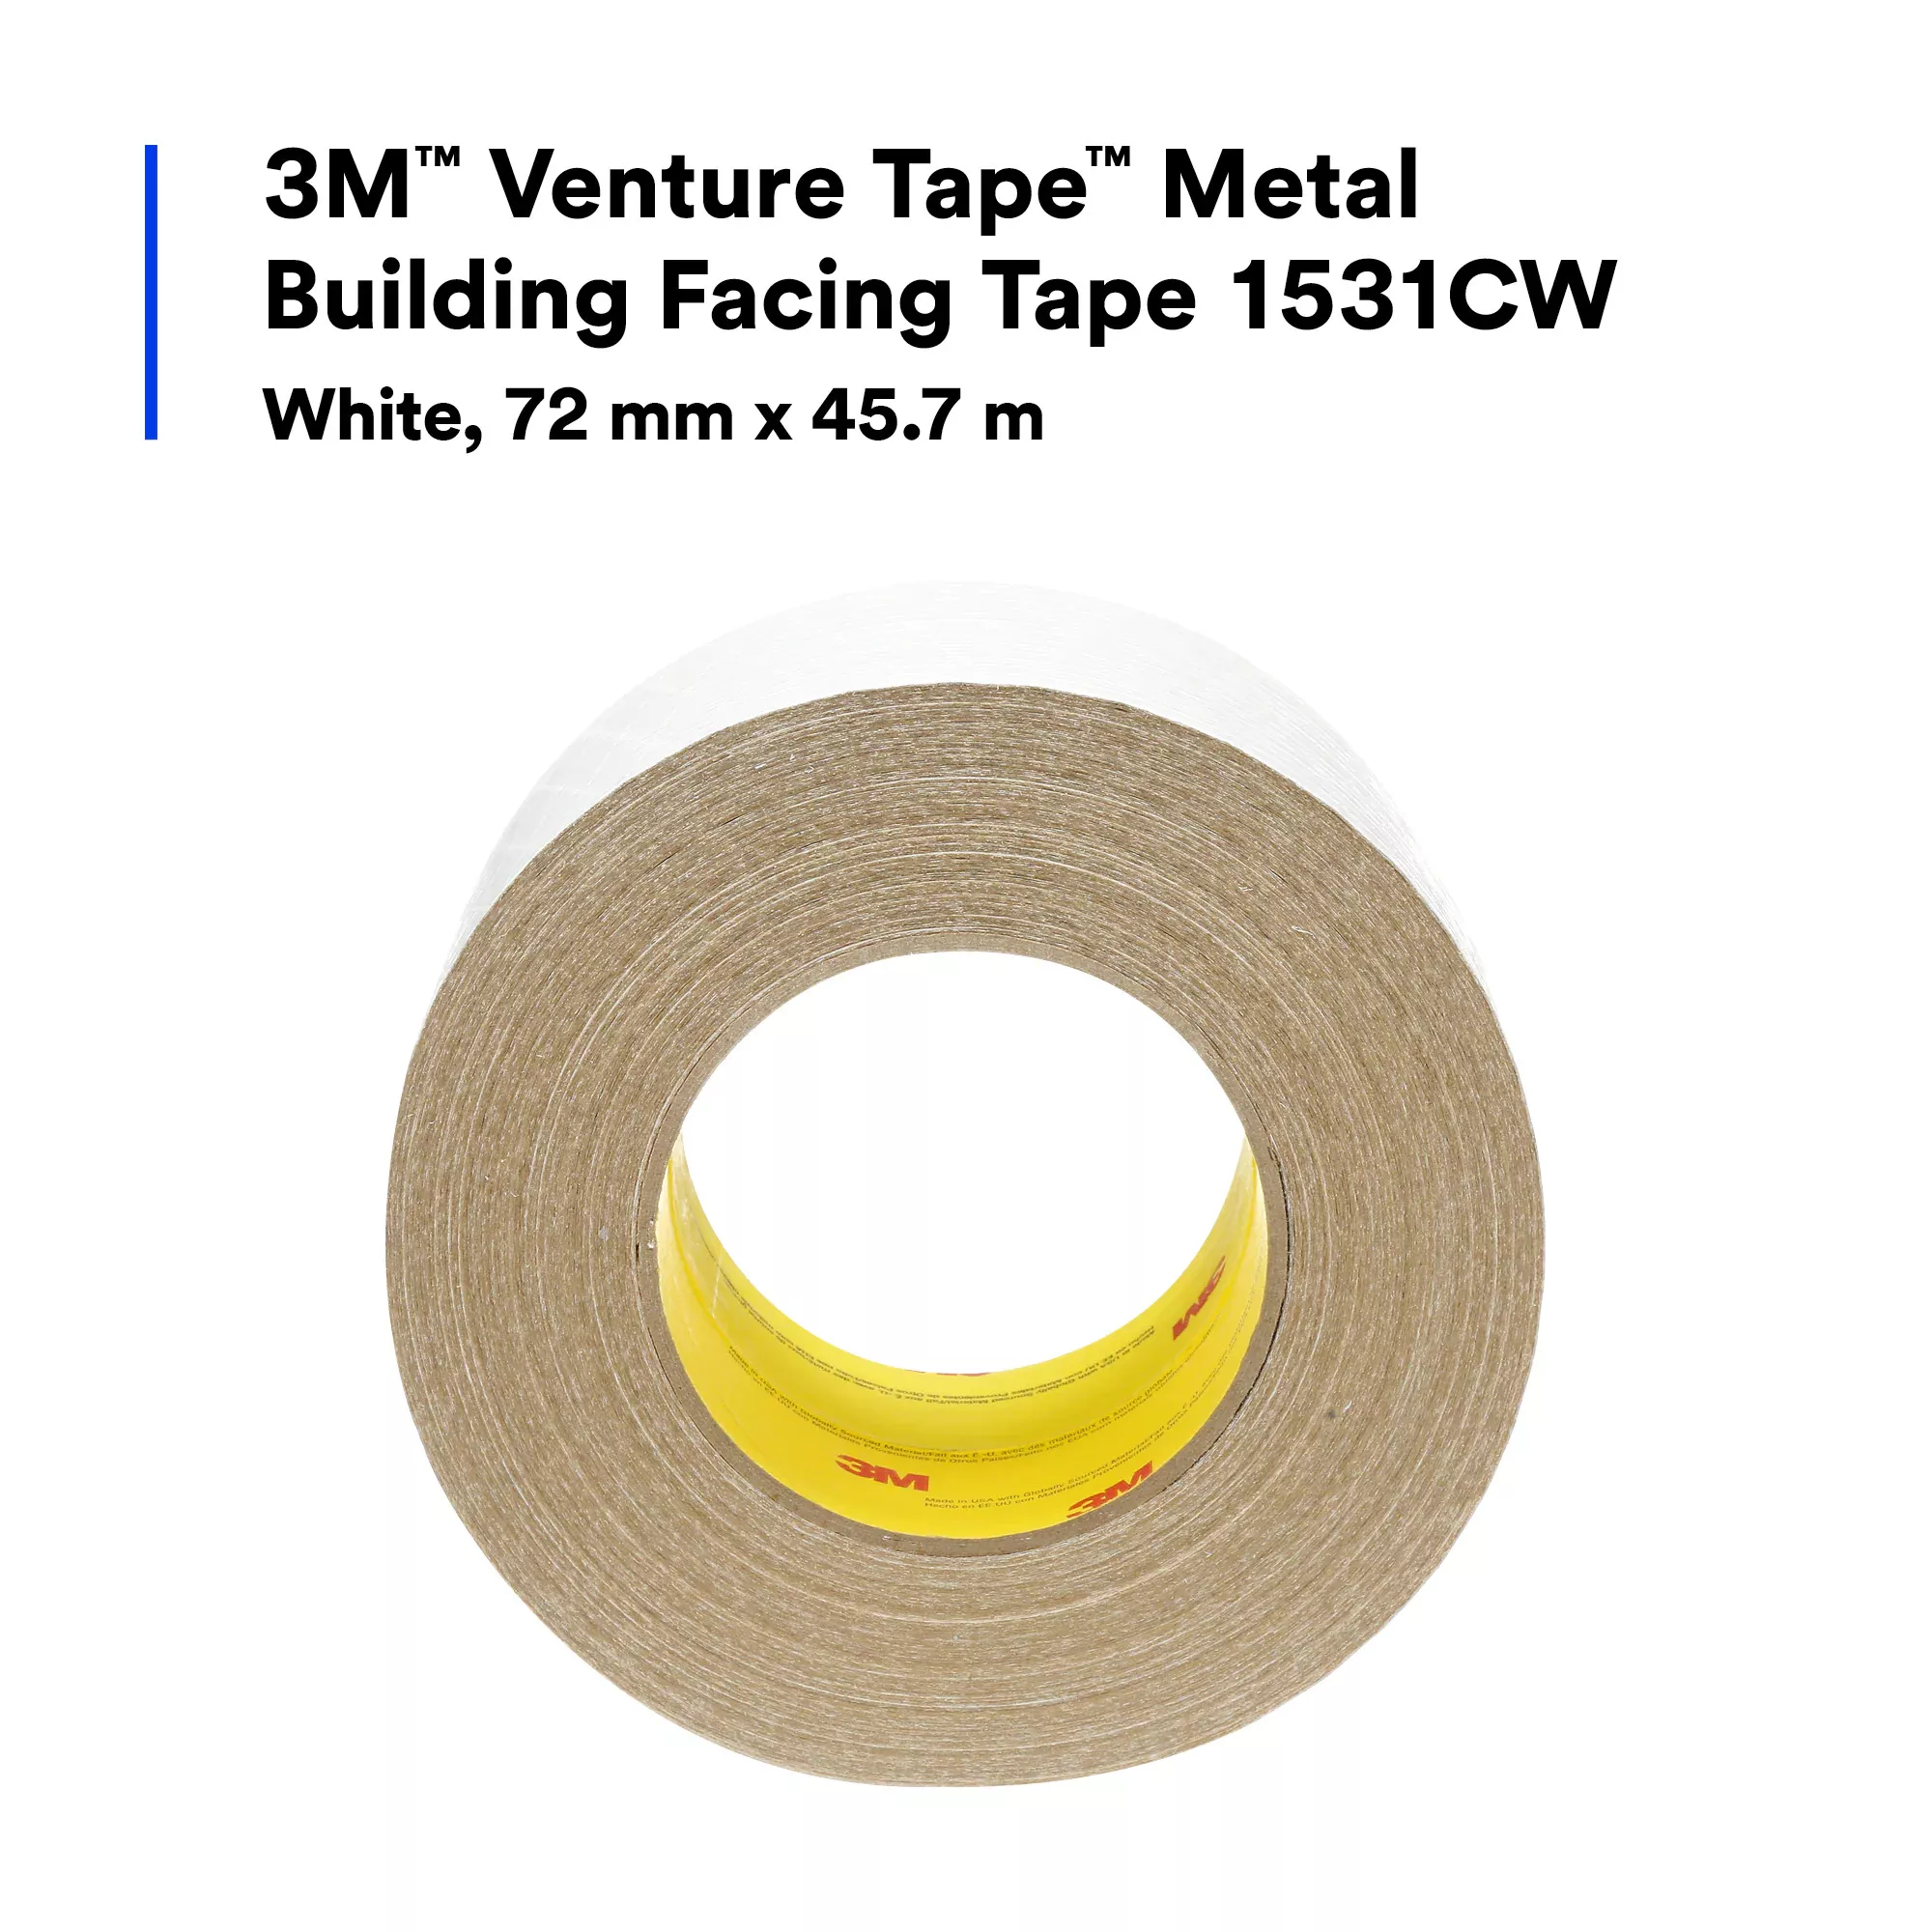 Product Number 1531CW | 3M™ Venture Tape™ Metal Building Facing Tape 1531CW